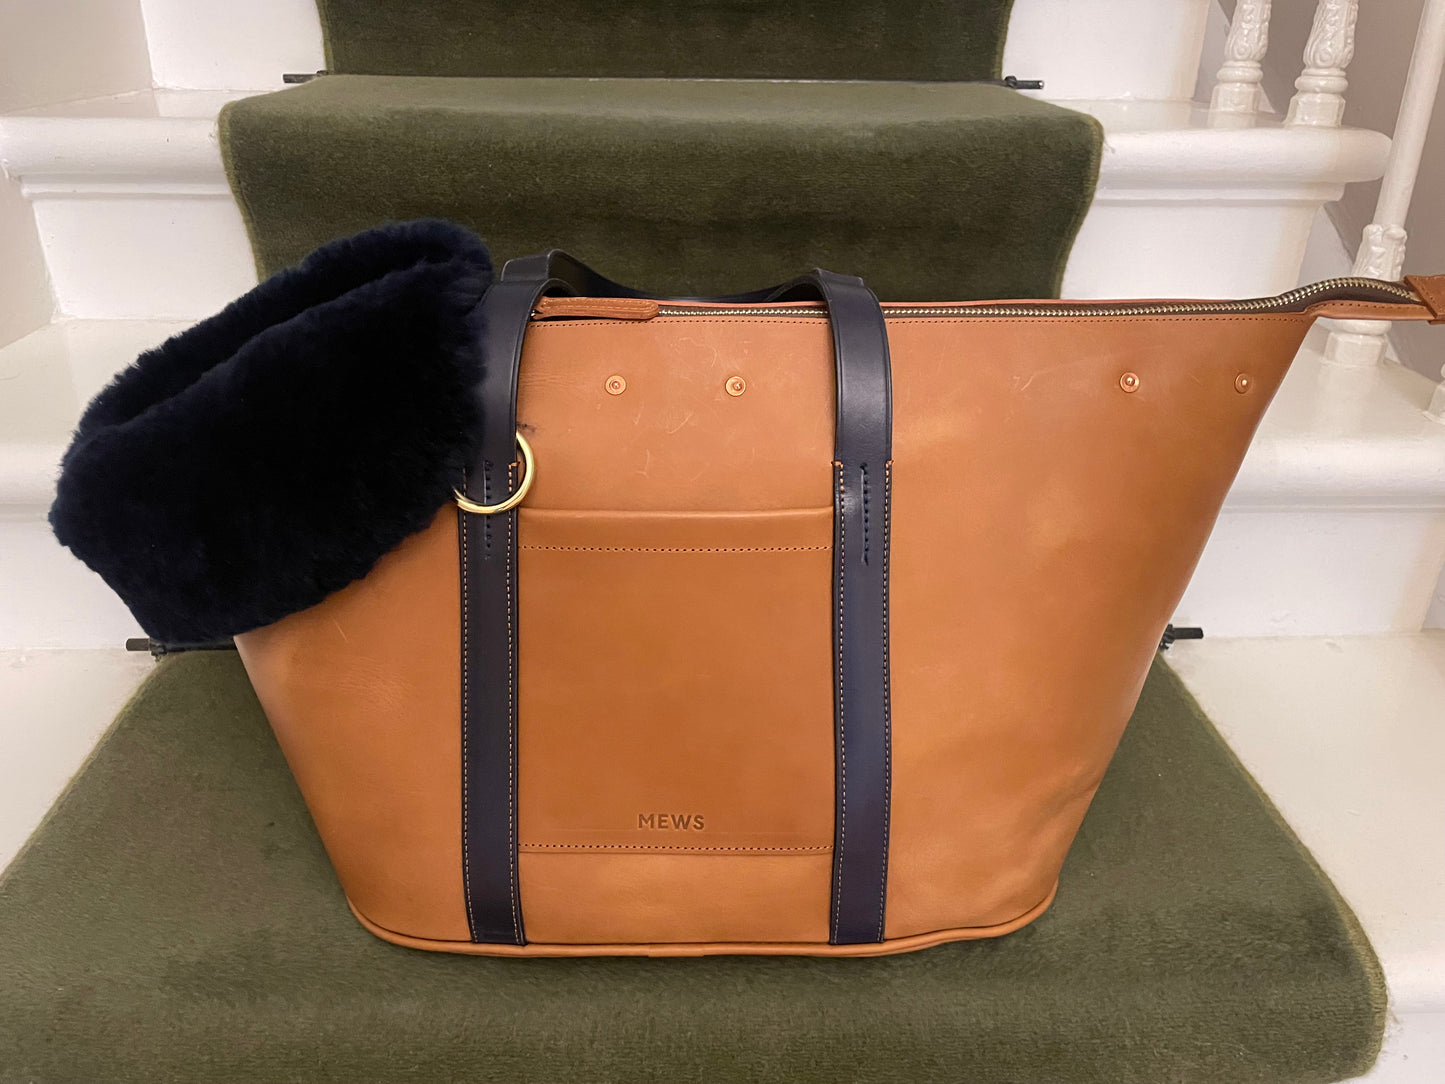 MEWS London Leather Dog Bag